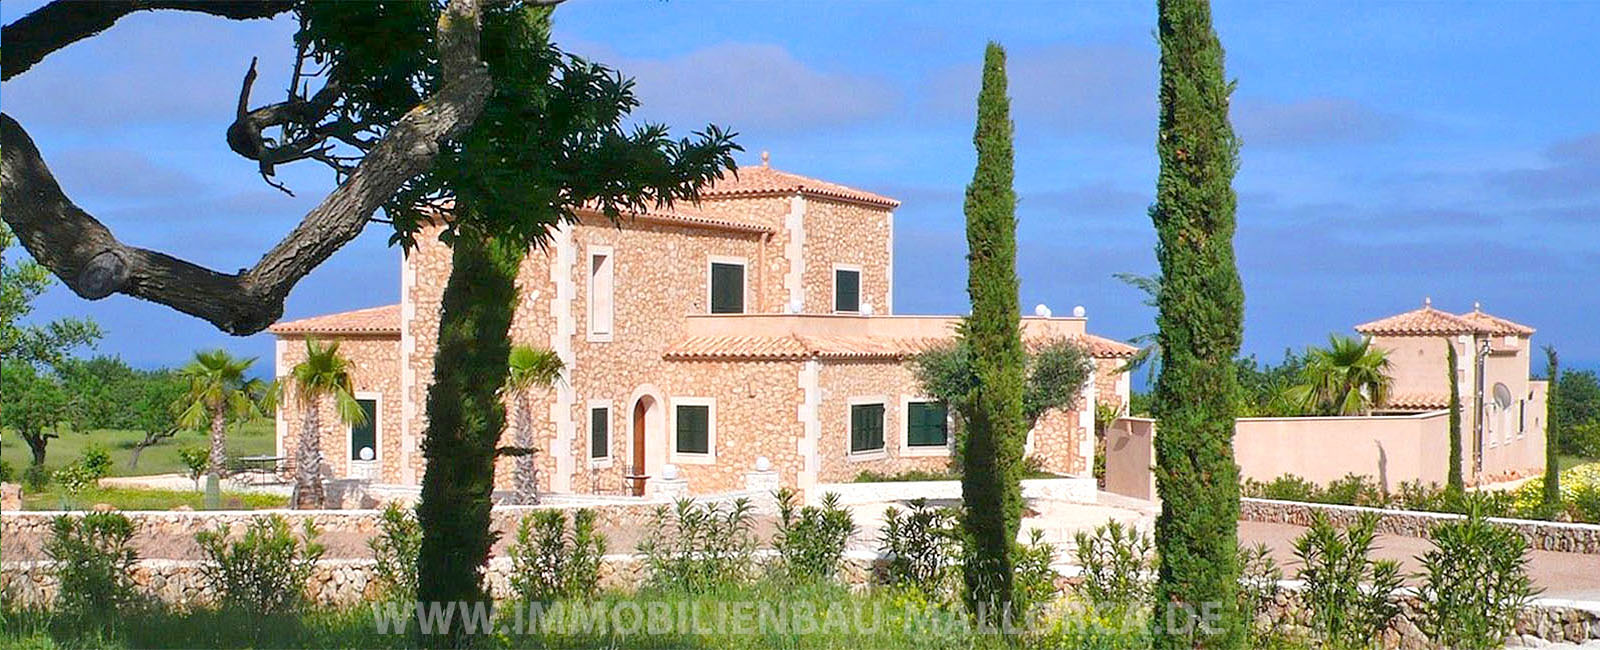 Finca_Mallorca_Immobilien